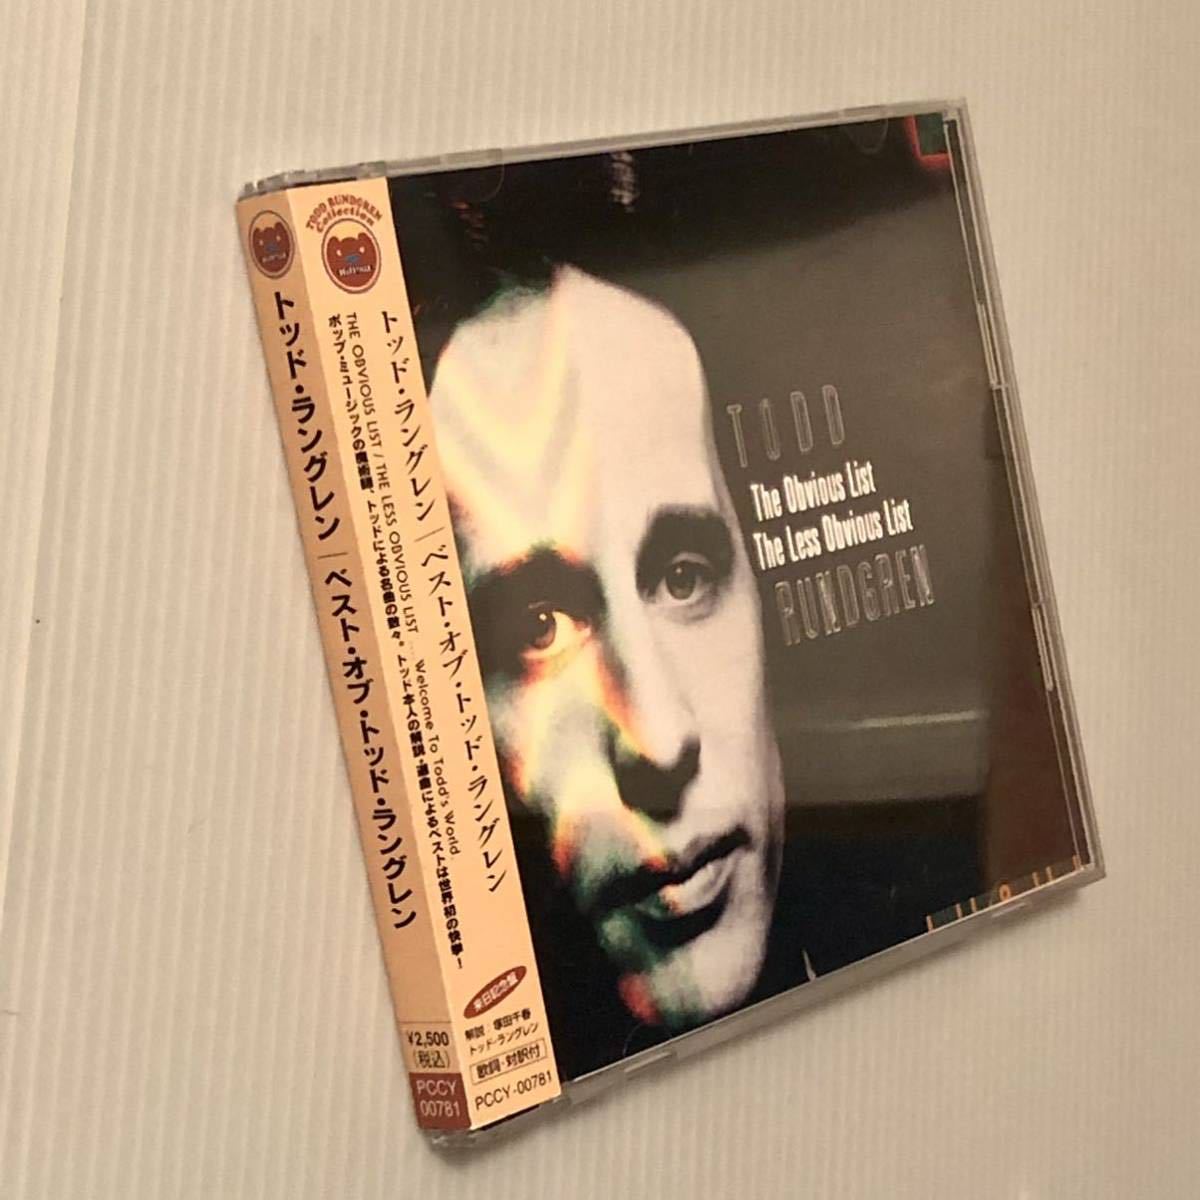 01★CD「ベスト・オブ・トッド・ラングレン■Best Of Todd Rundgren」★再生1,2回 美品/ベアズヴィル レーベル/vearsville 来日記念盤